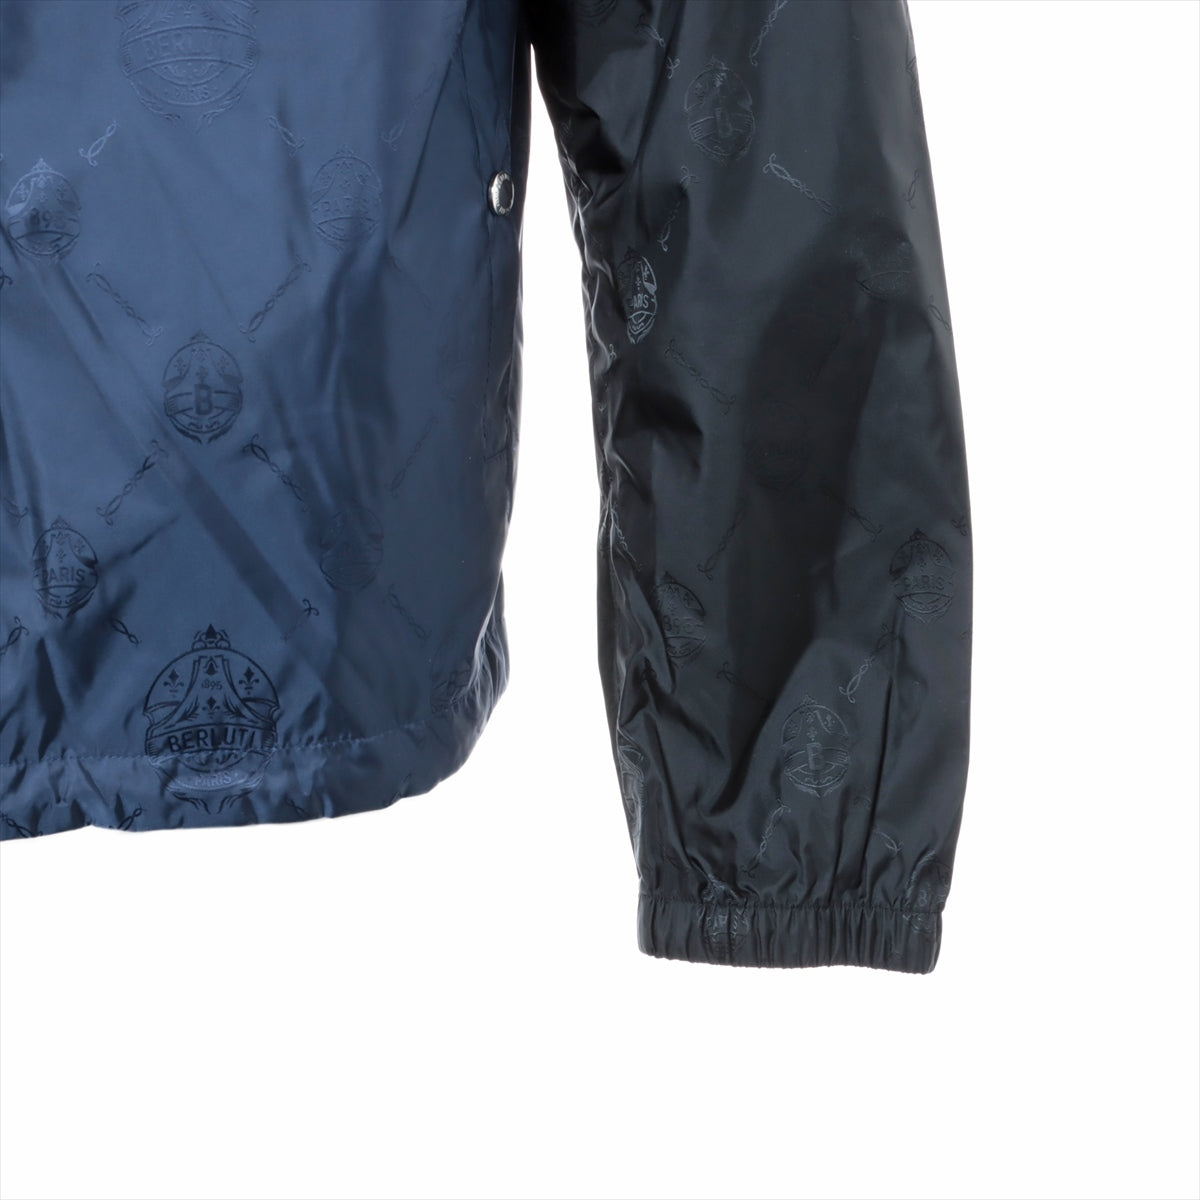 Berluti Cotton & nylon Nylon jacket 50 Men's Blue x black  R19OBU77 Signature B-Way